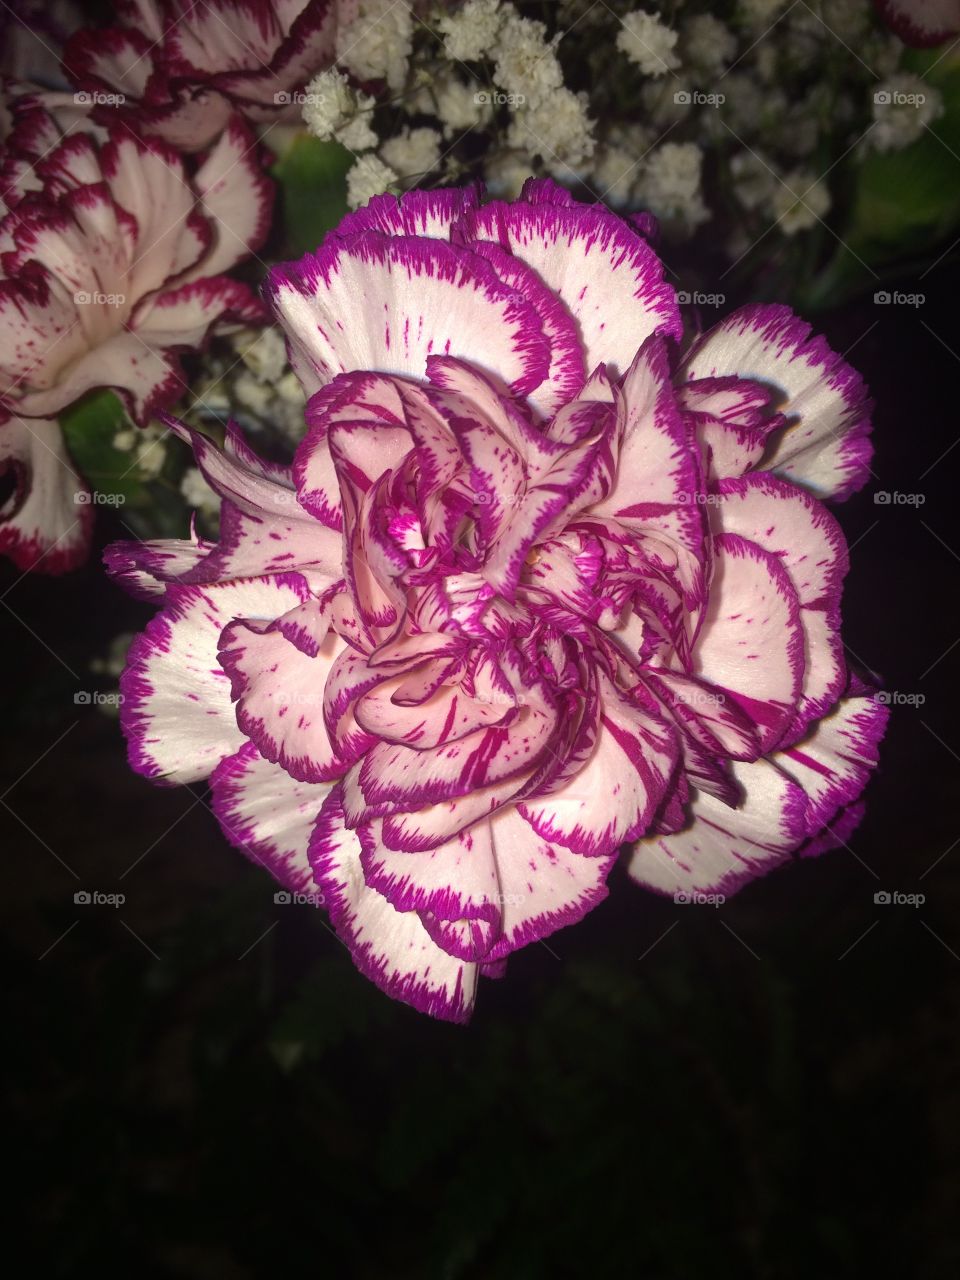 up-close flower